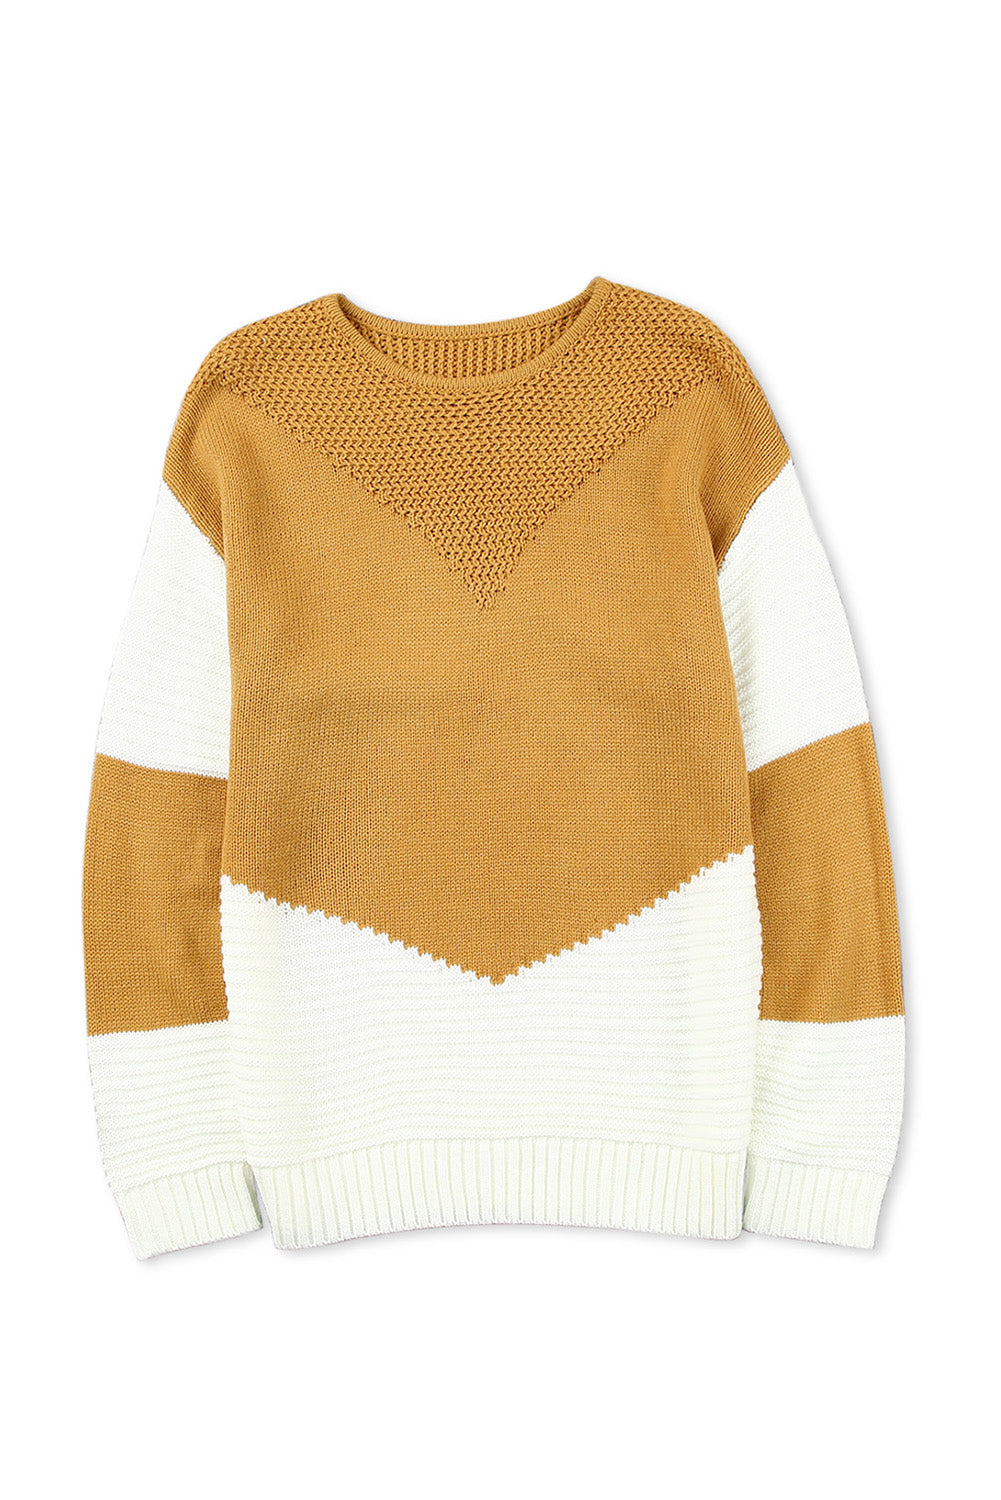 Jordan Brown Colorblock Chevron Knit Pullover Sweater